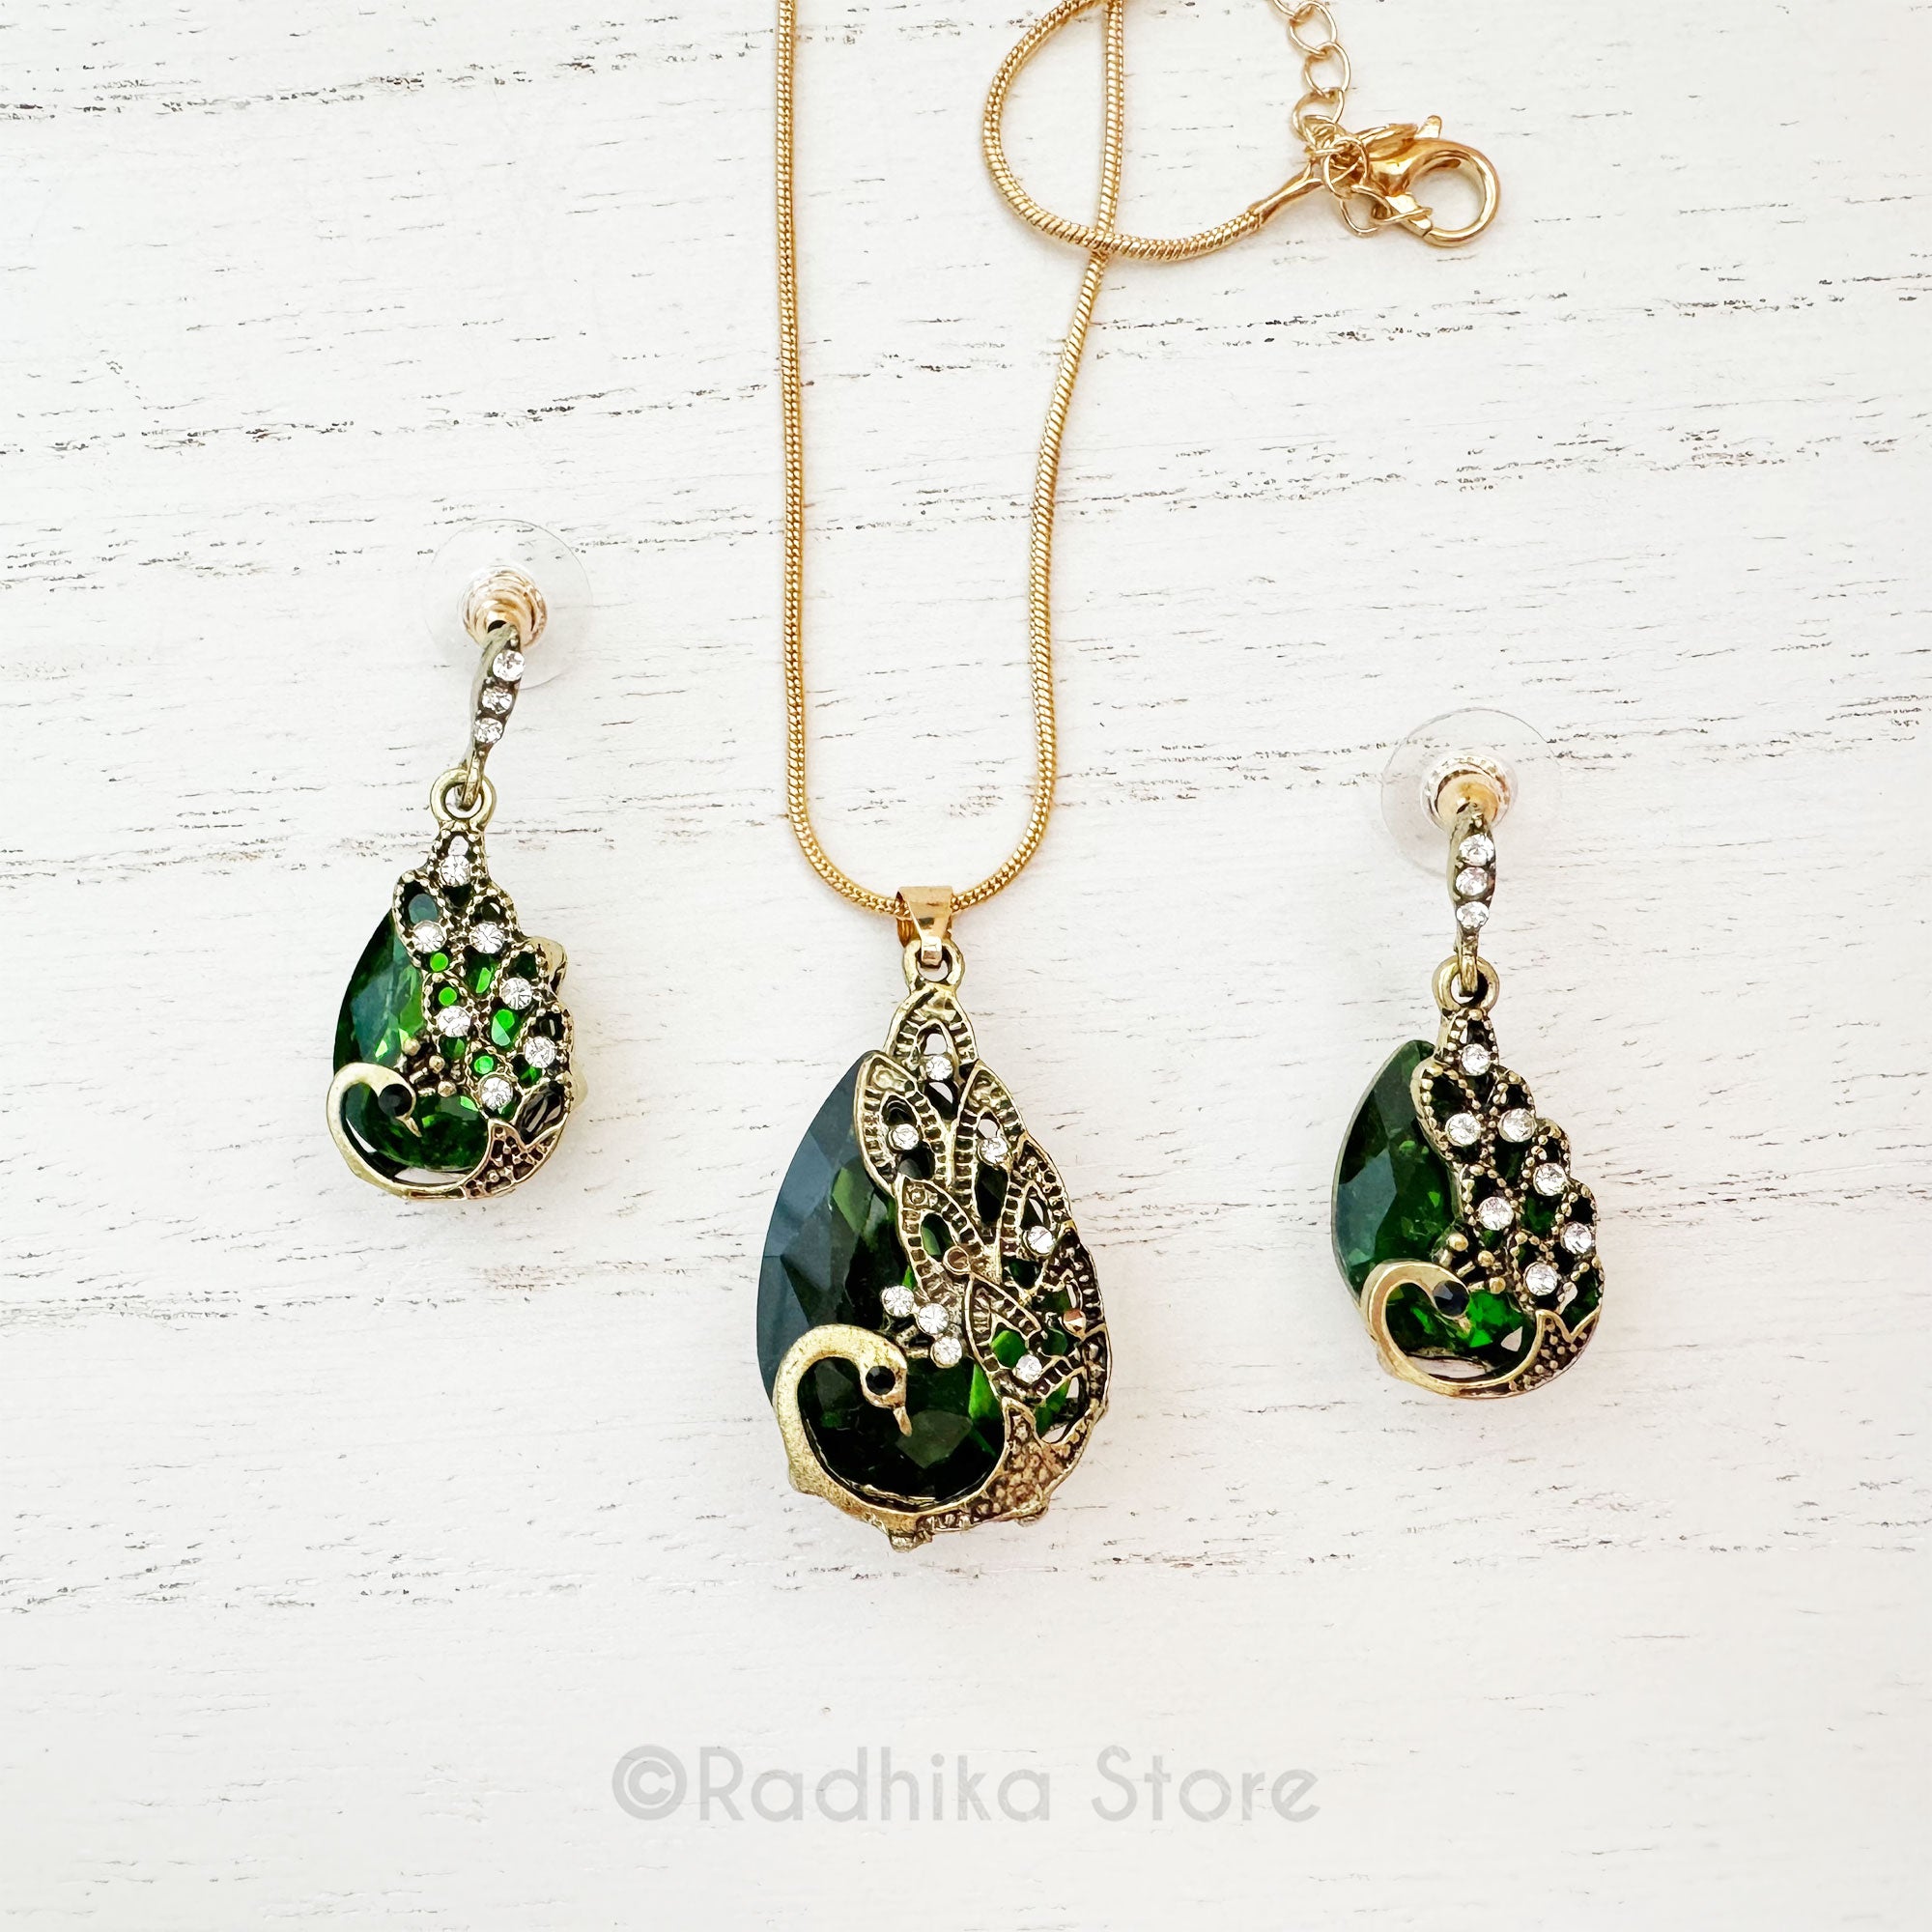 Emerald Peacock Tears Crystal Rhinestone Deity Necklace And Earring Set